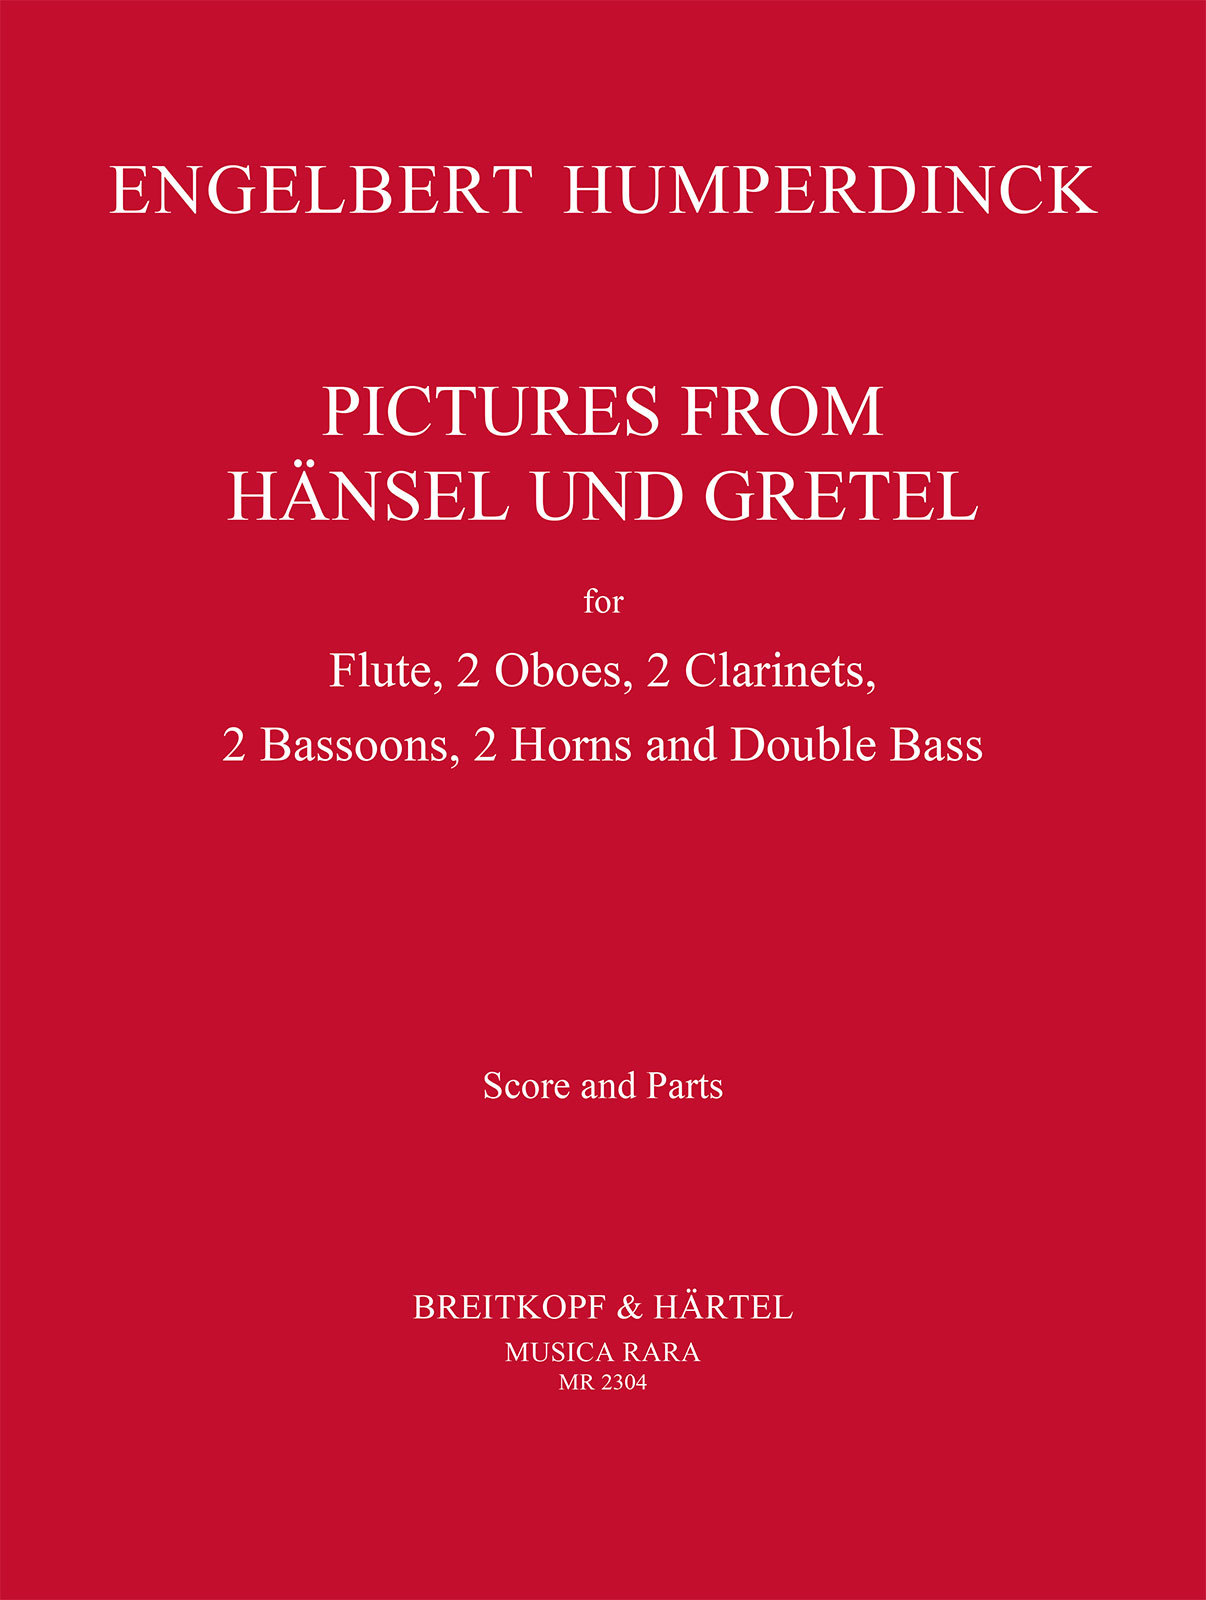 Humperdinck Pictures From Hansel Und Gretel Sc/pts Sheet Music Songbook